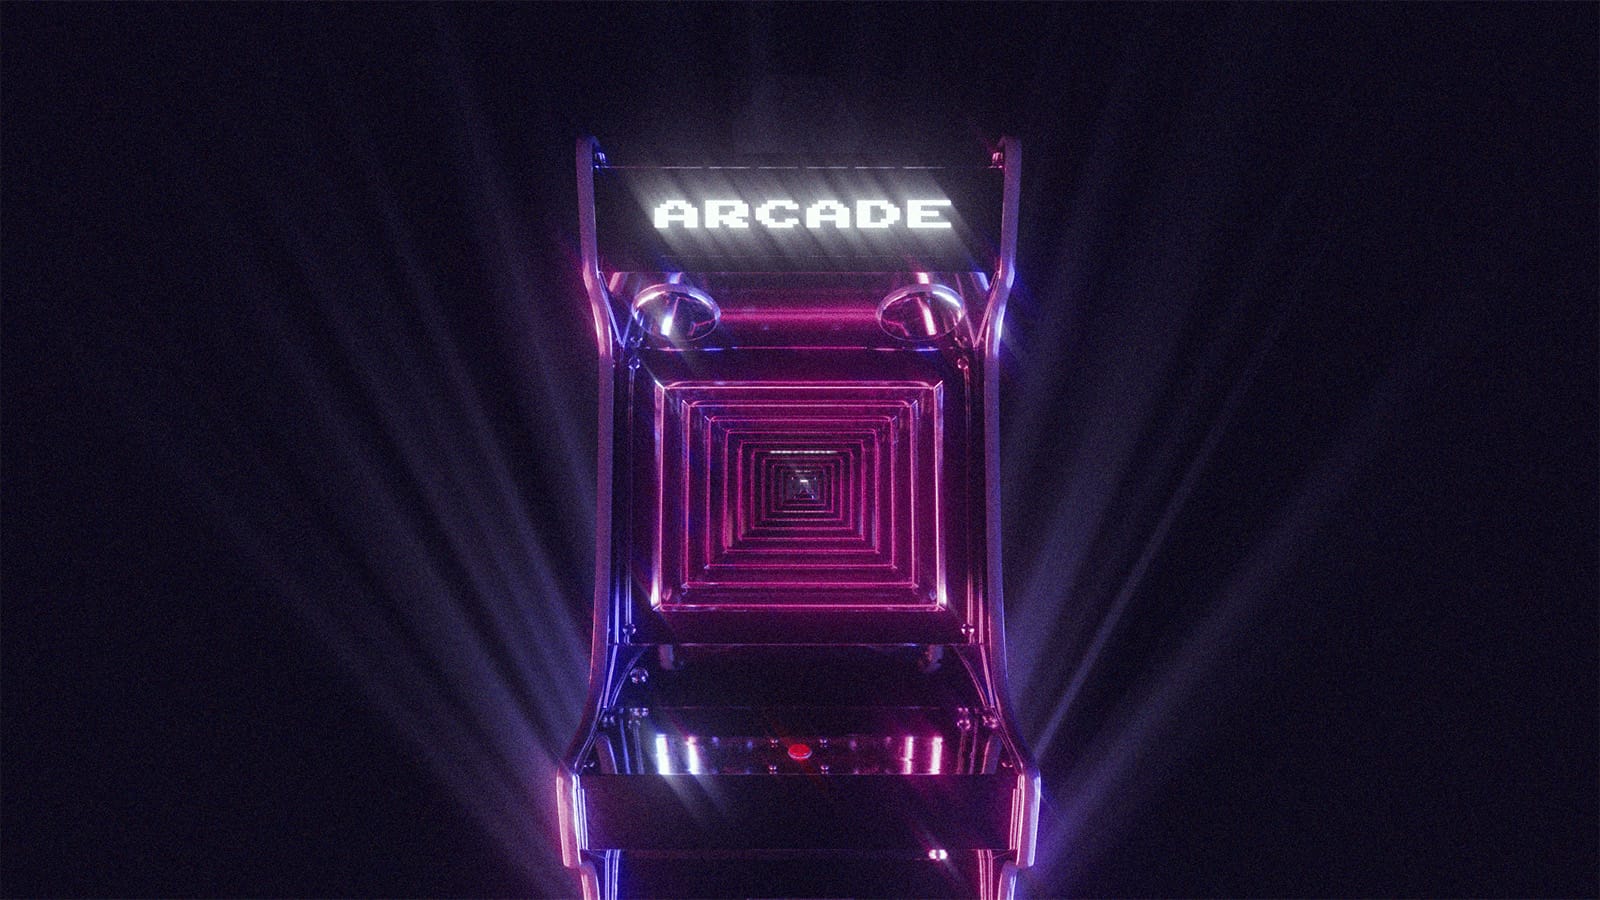 A purple lit up arcade machine